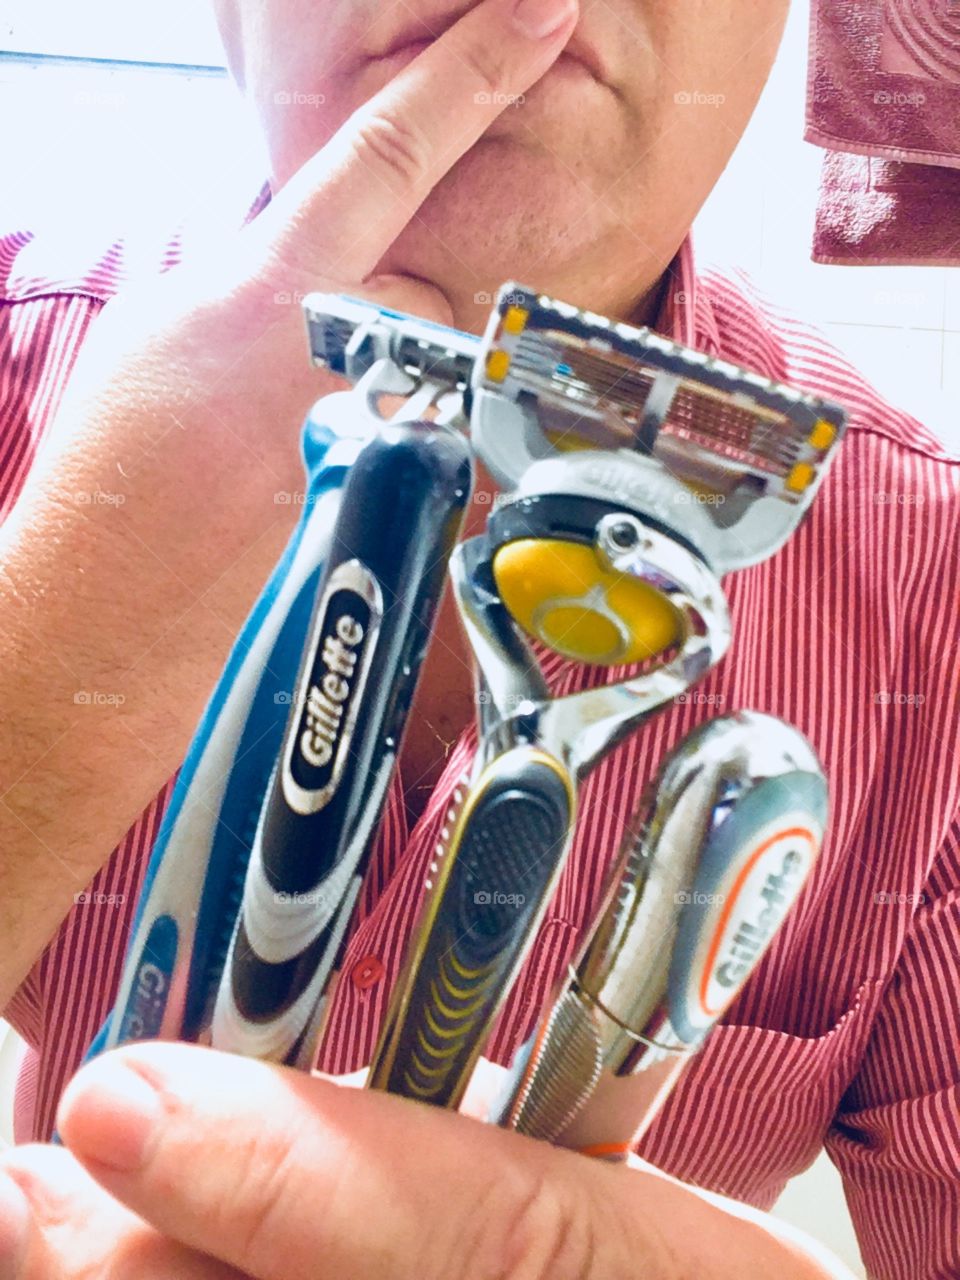 My ritual for shaving: qual Gillette escolher?